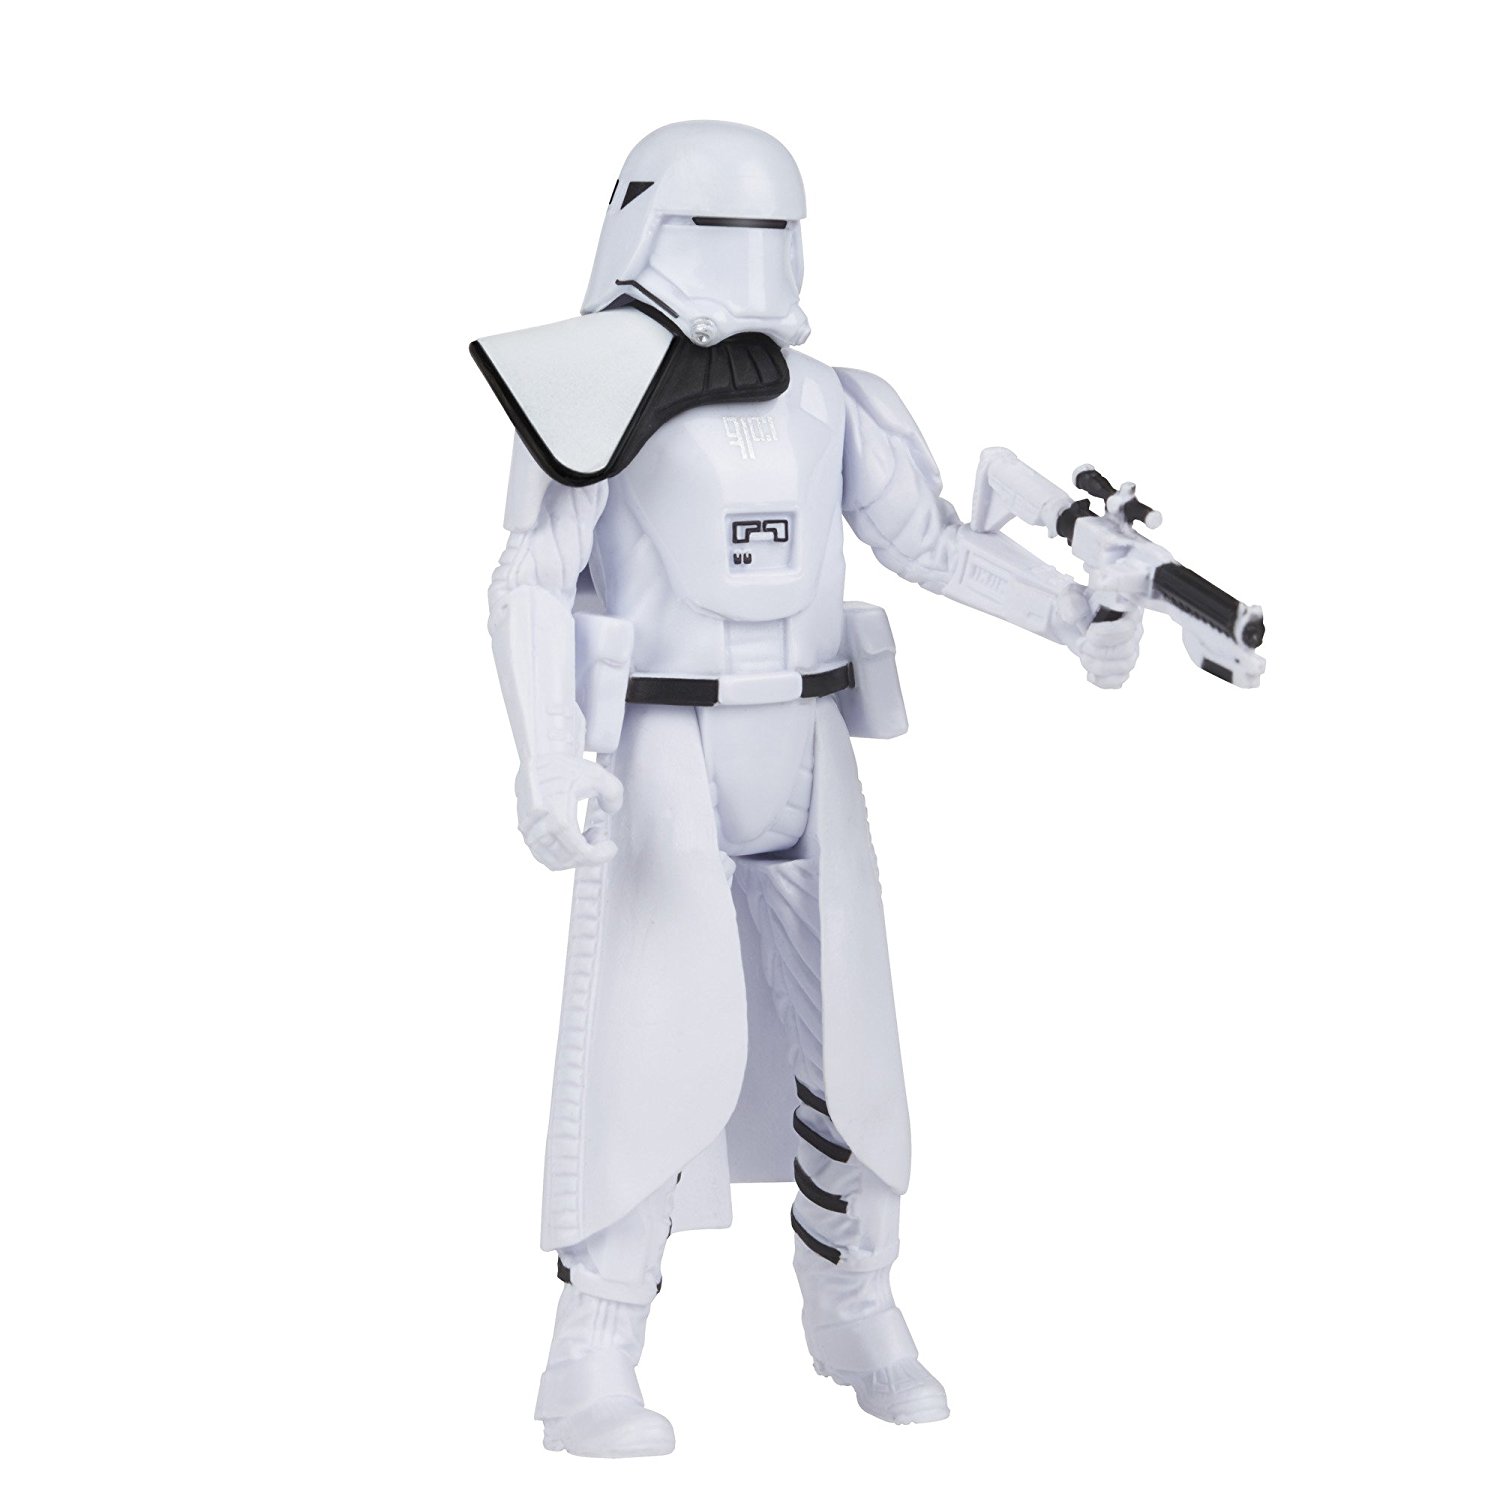 Disney Star Wars First Order 'Snowtrooper & Poe Dameron' Action Figure Toy